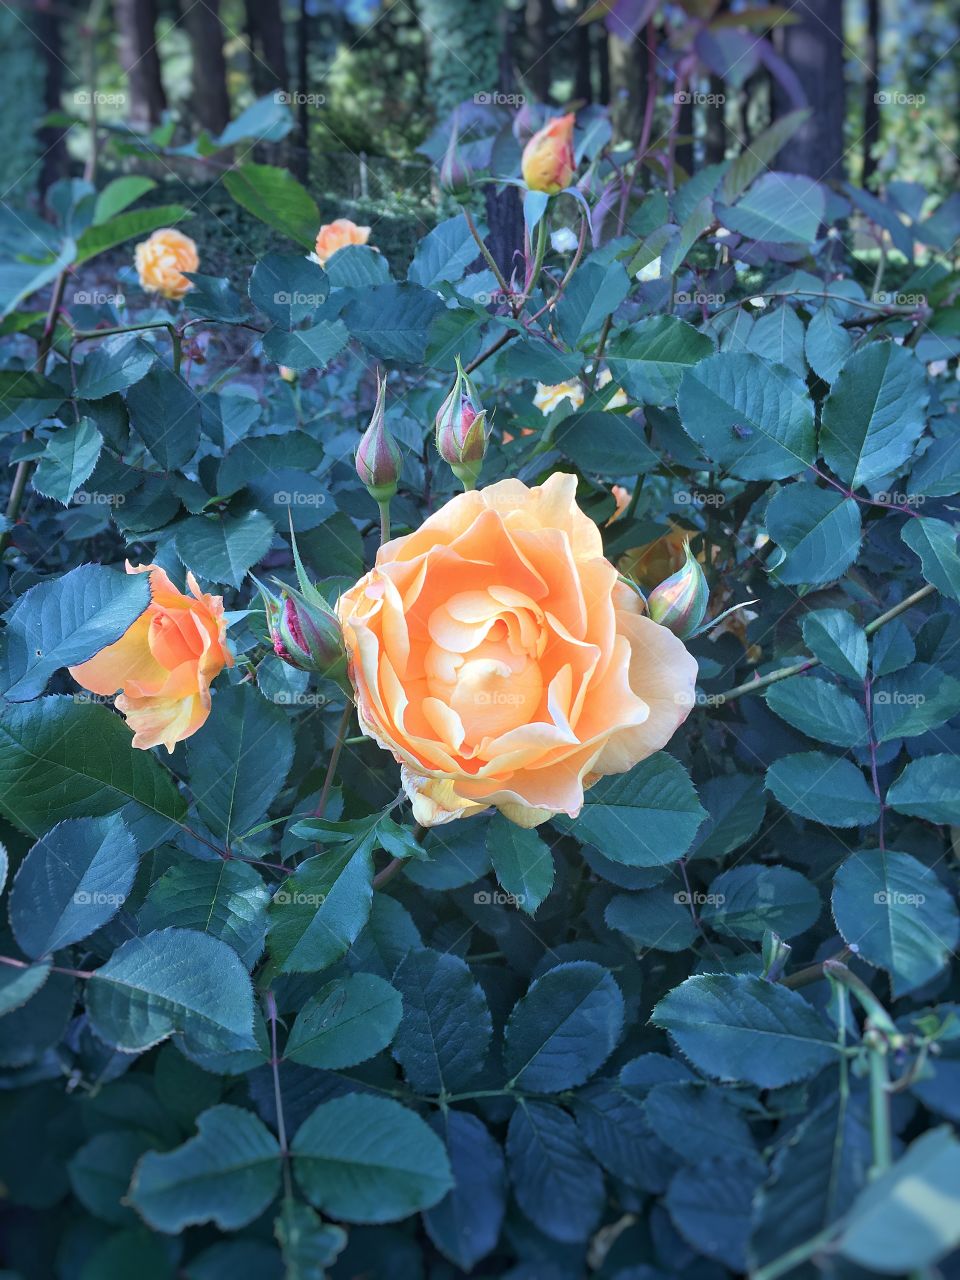 Rose garden, Portland, Oregon 